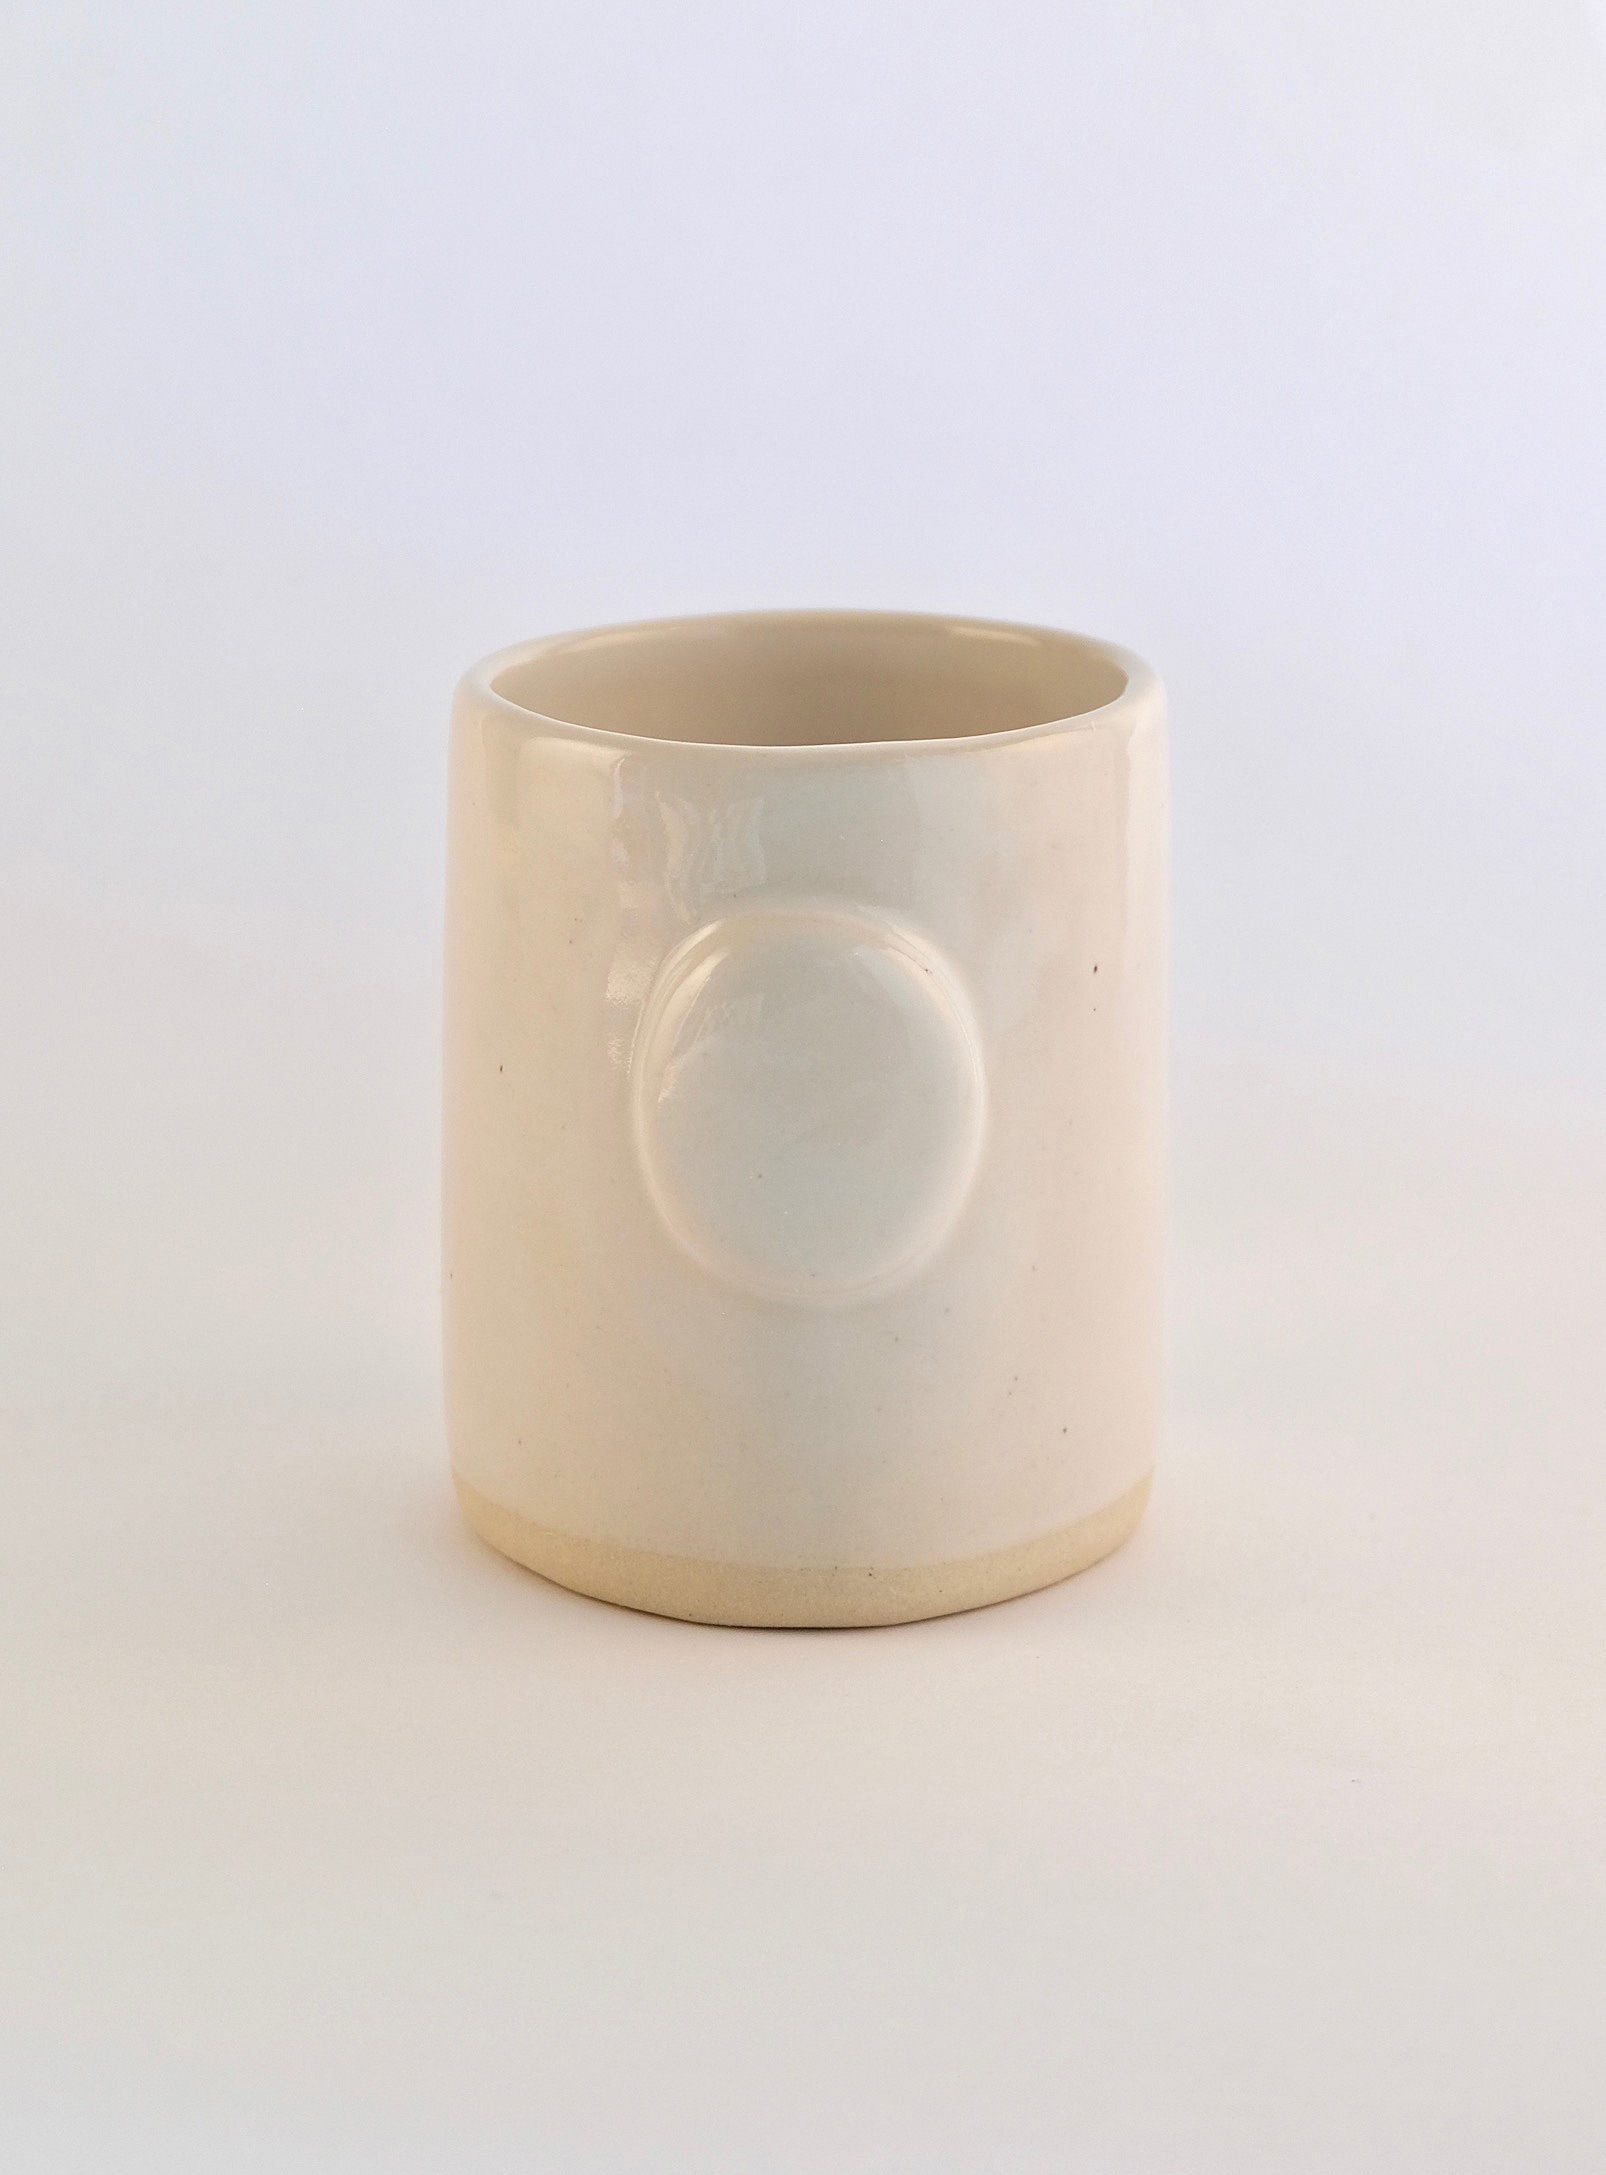 Late bloomer ceramics - Pebble tumbler Limited series